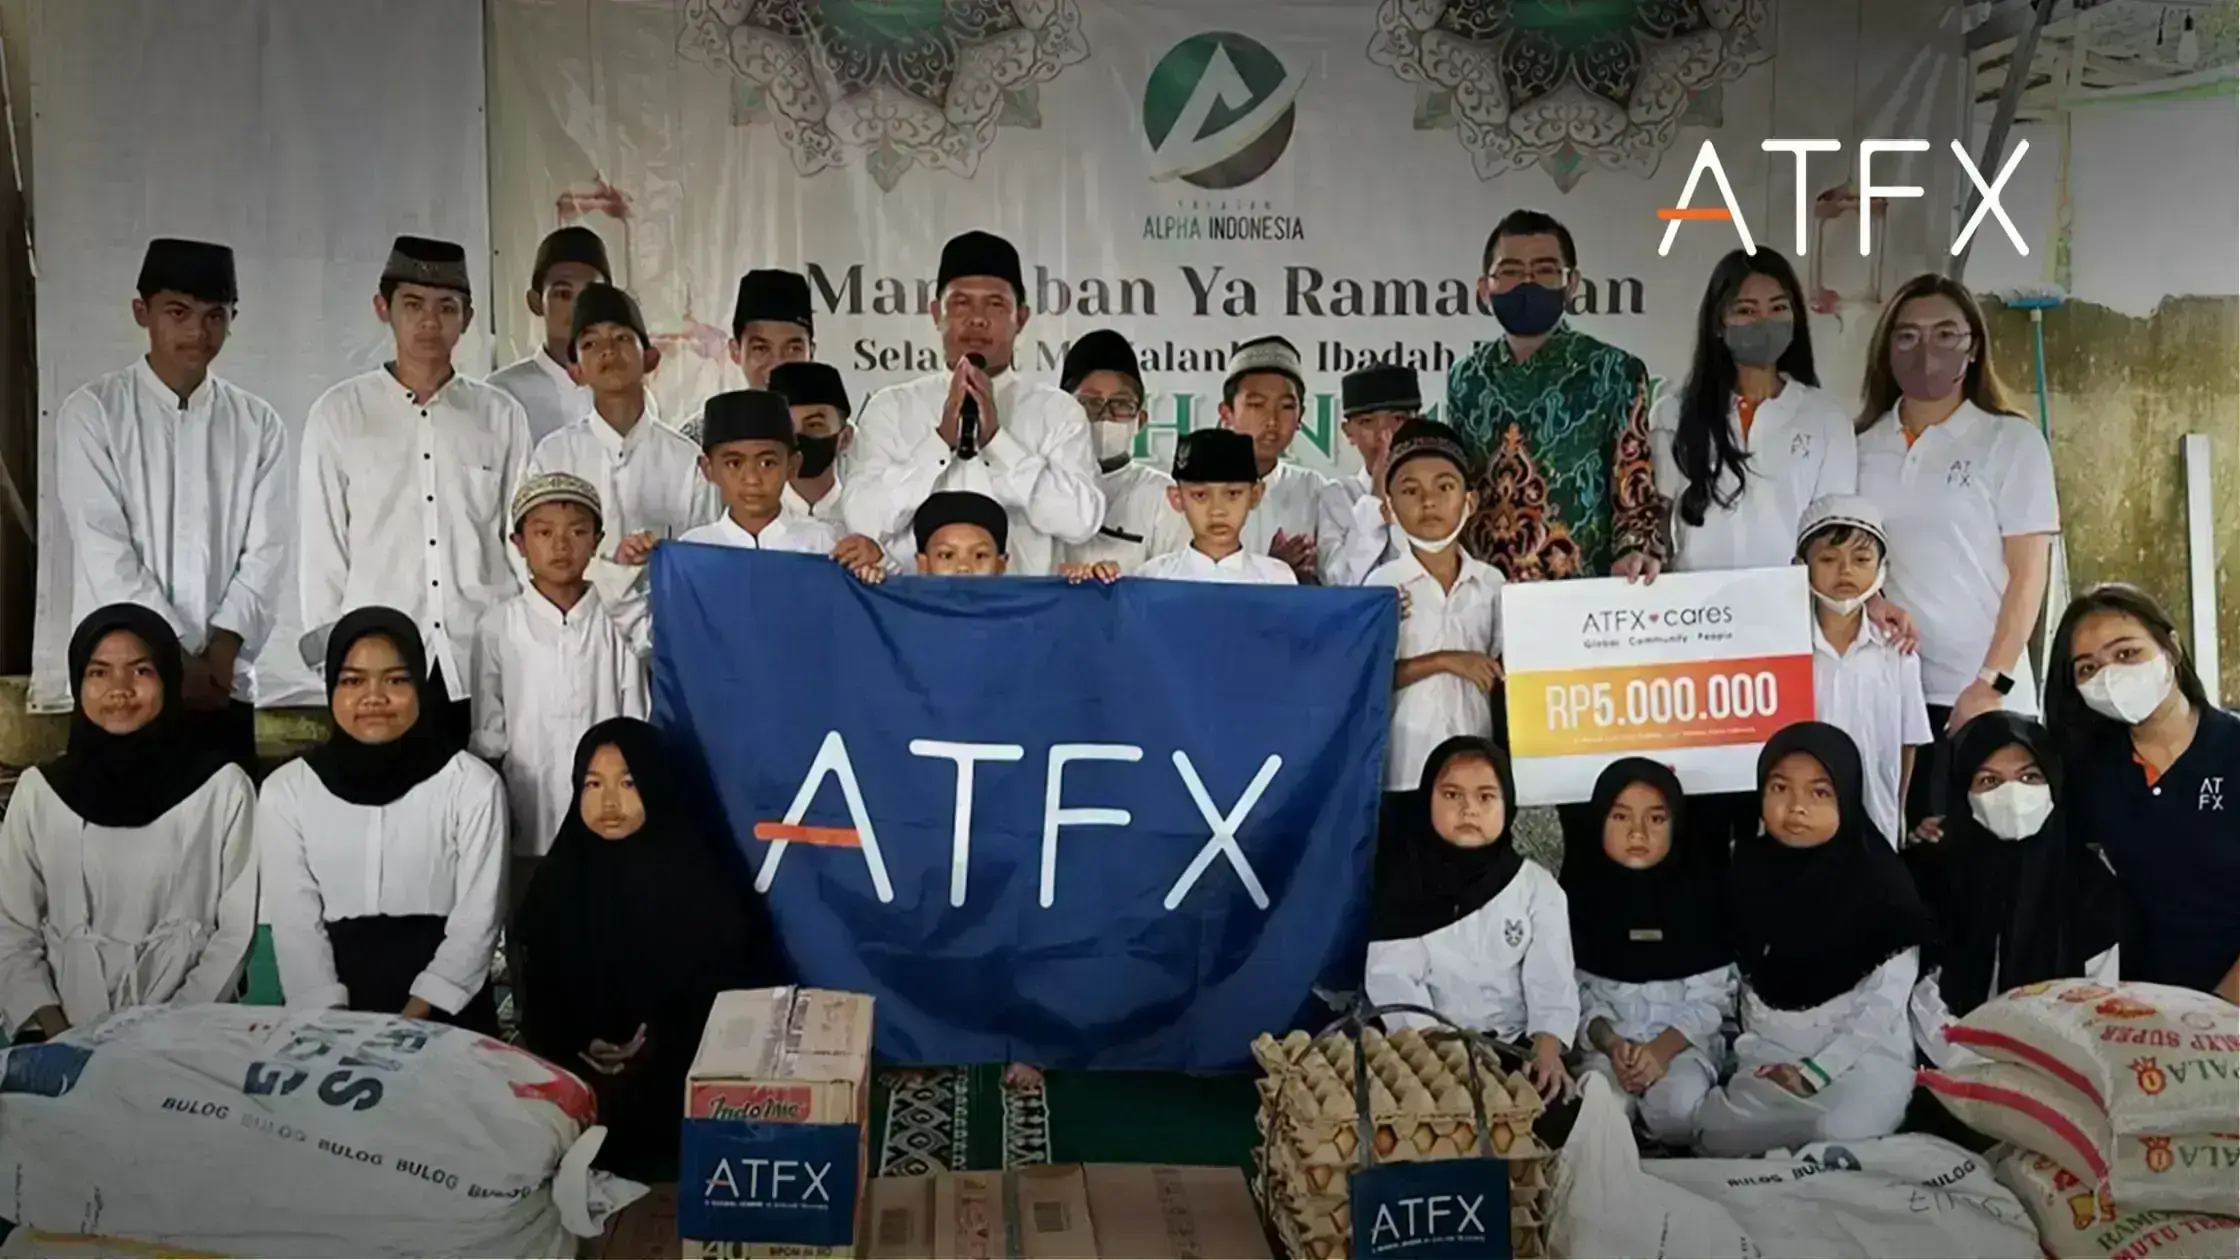 ATFX visit Indonesia orphanage